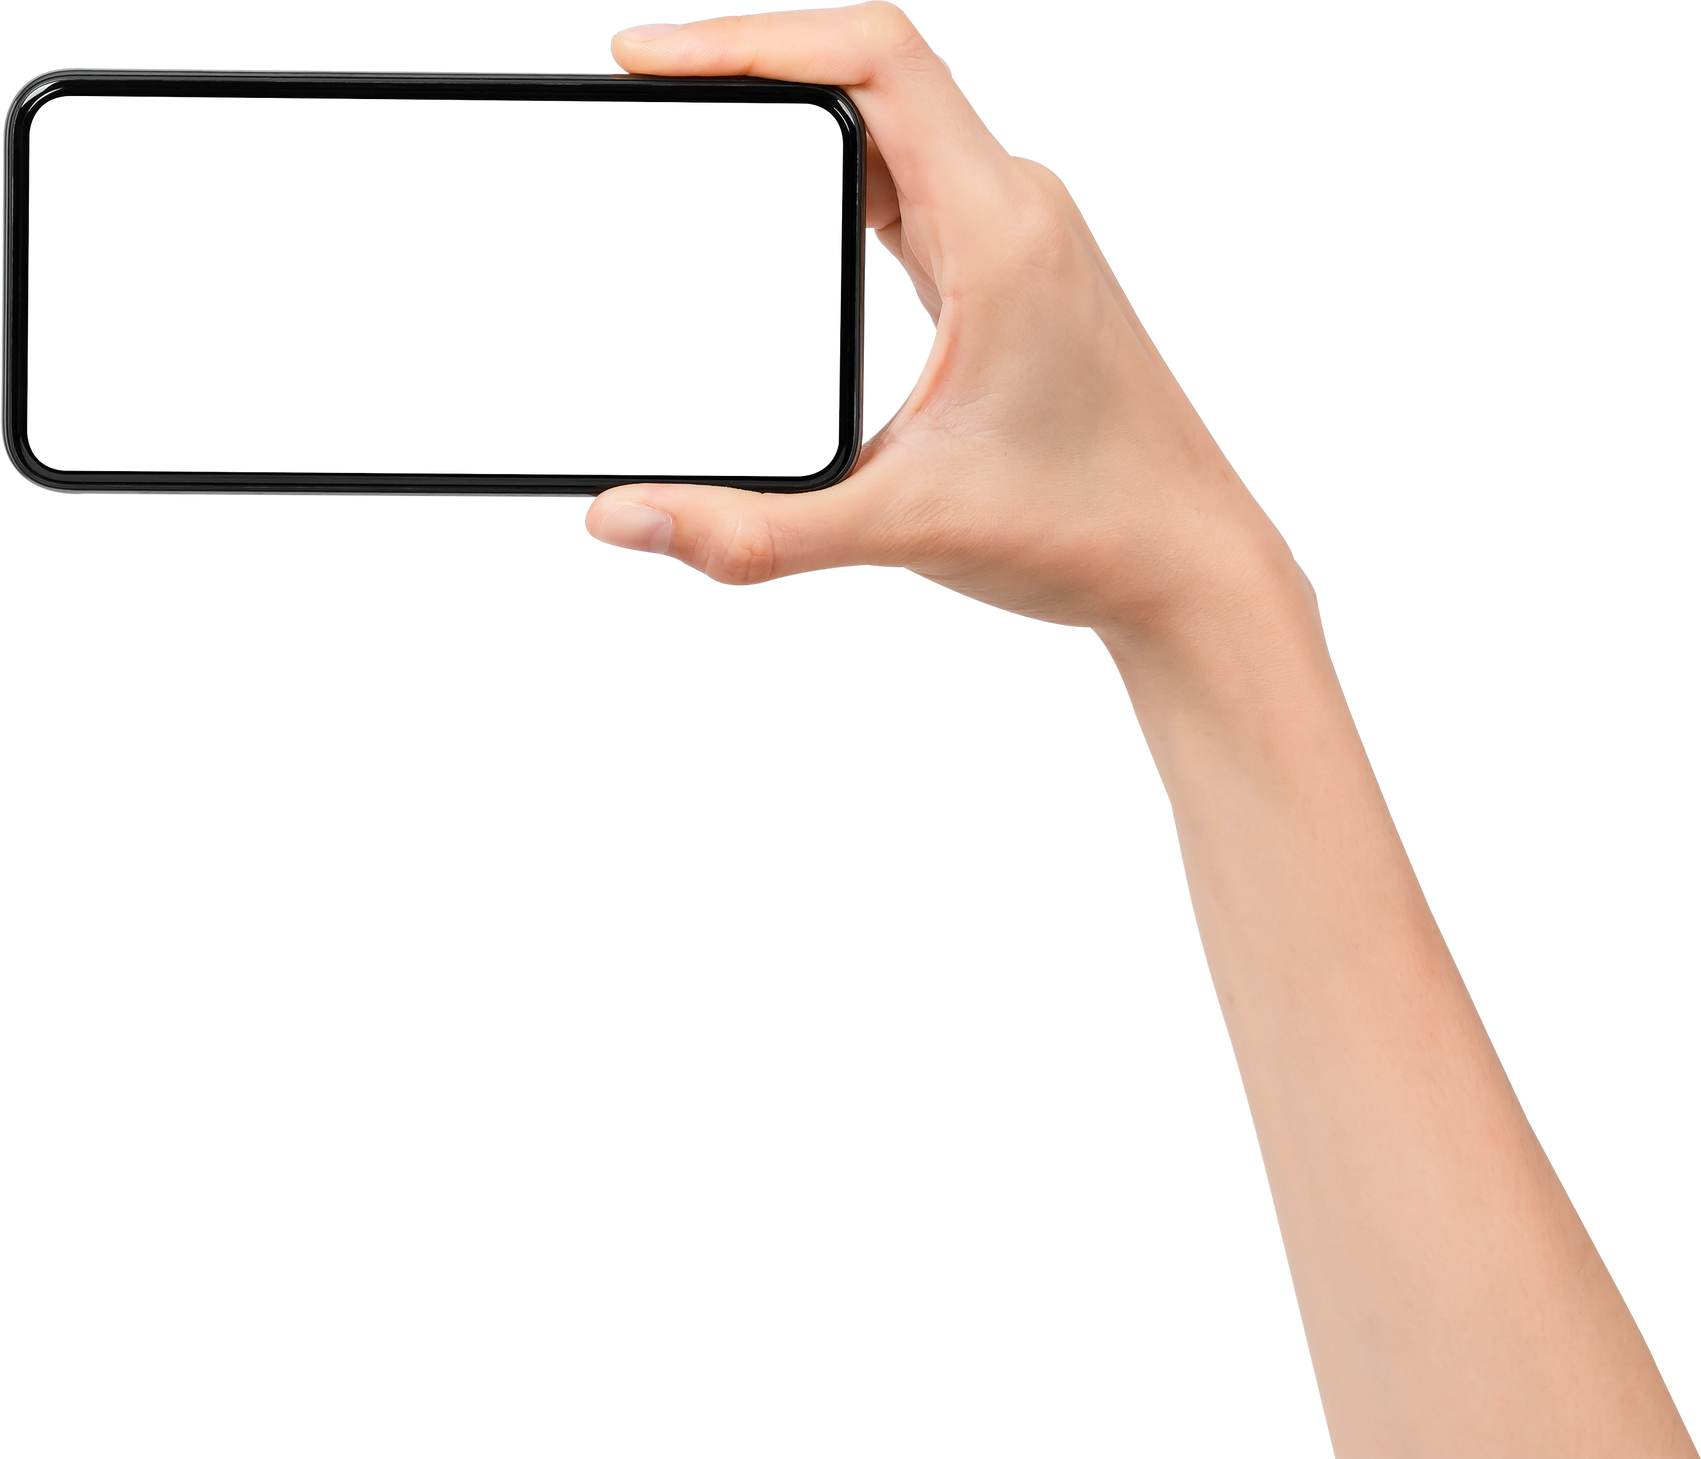 Smartphone Held Horizontally with Blank Screen